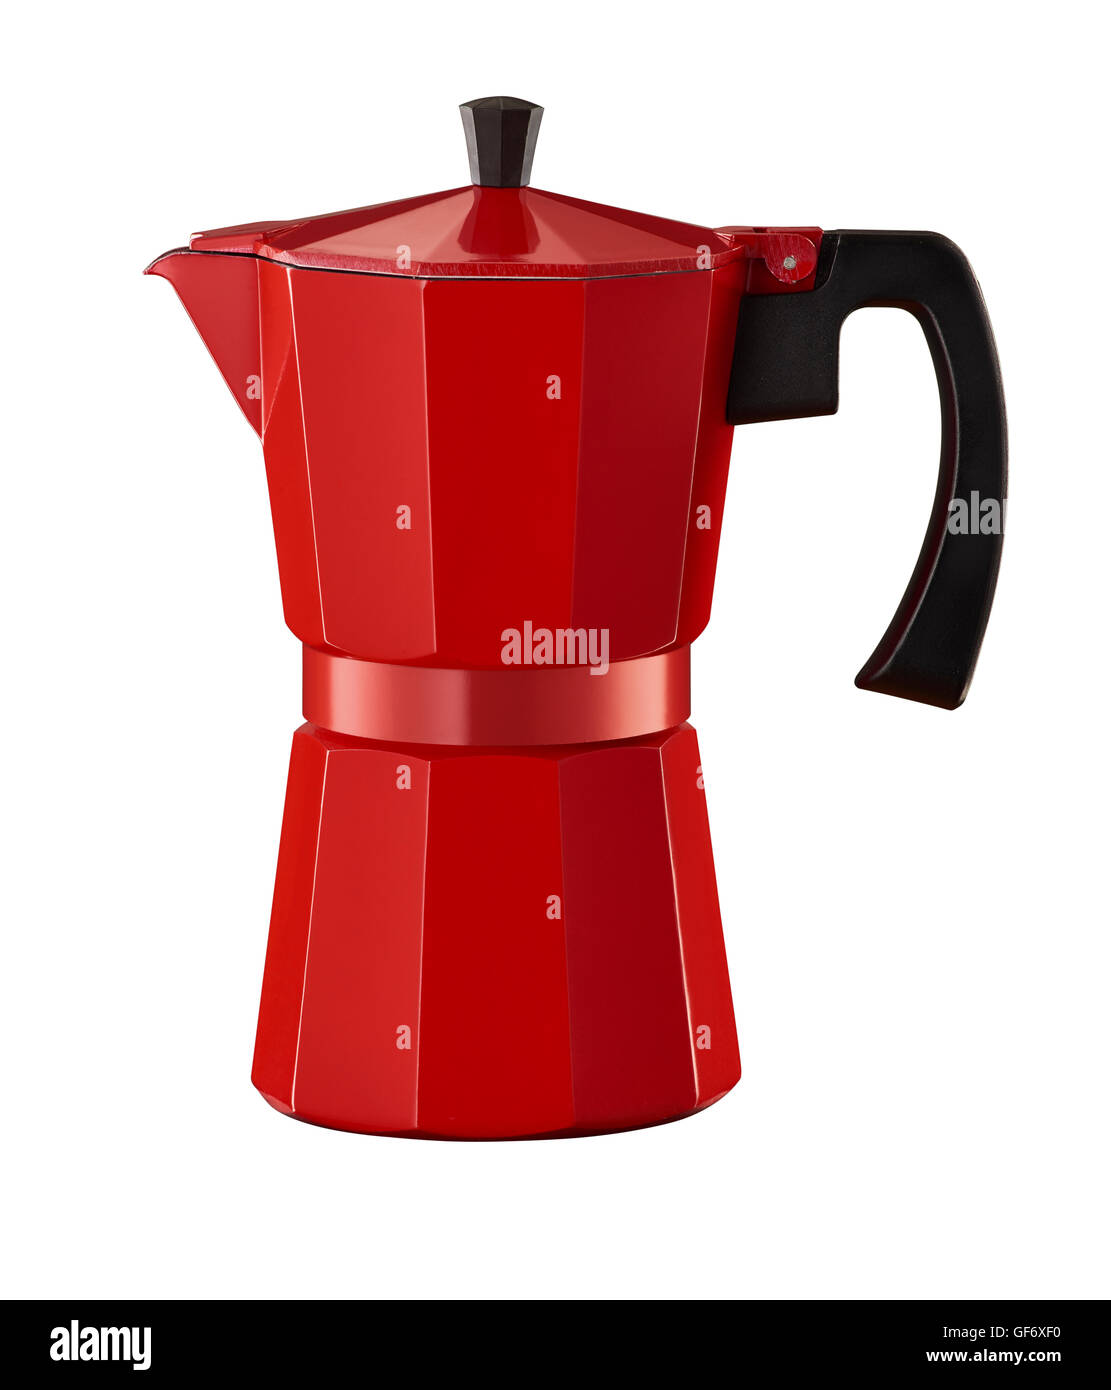 https://c8.alamy.com/comp/GF6XF0/red-coffee-percolator-GF6XF0.jpg